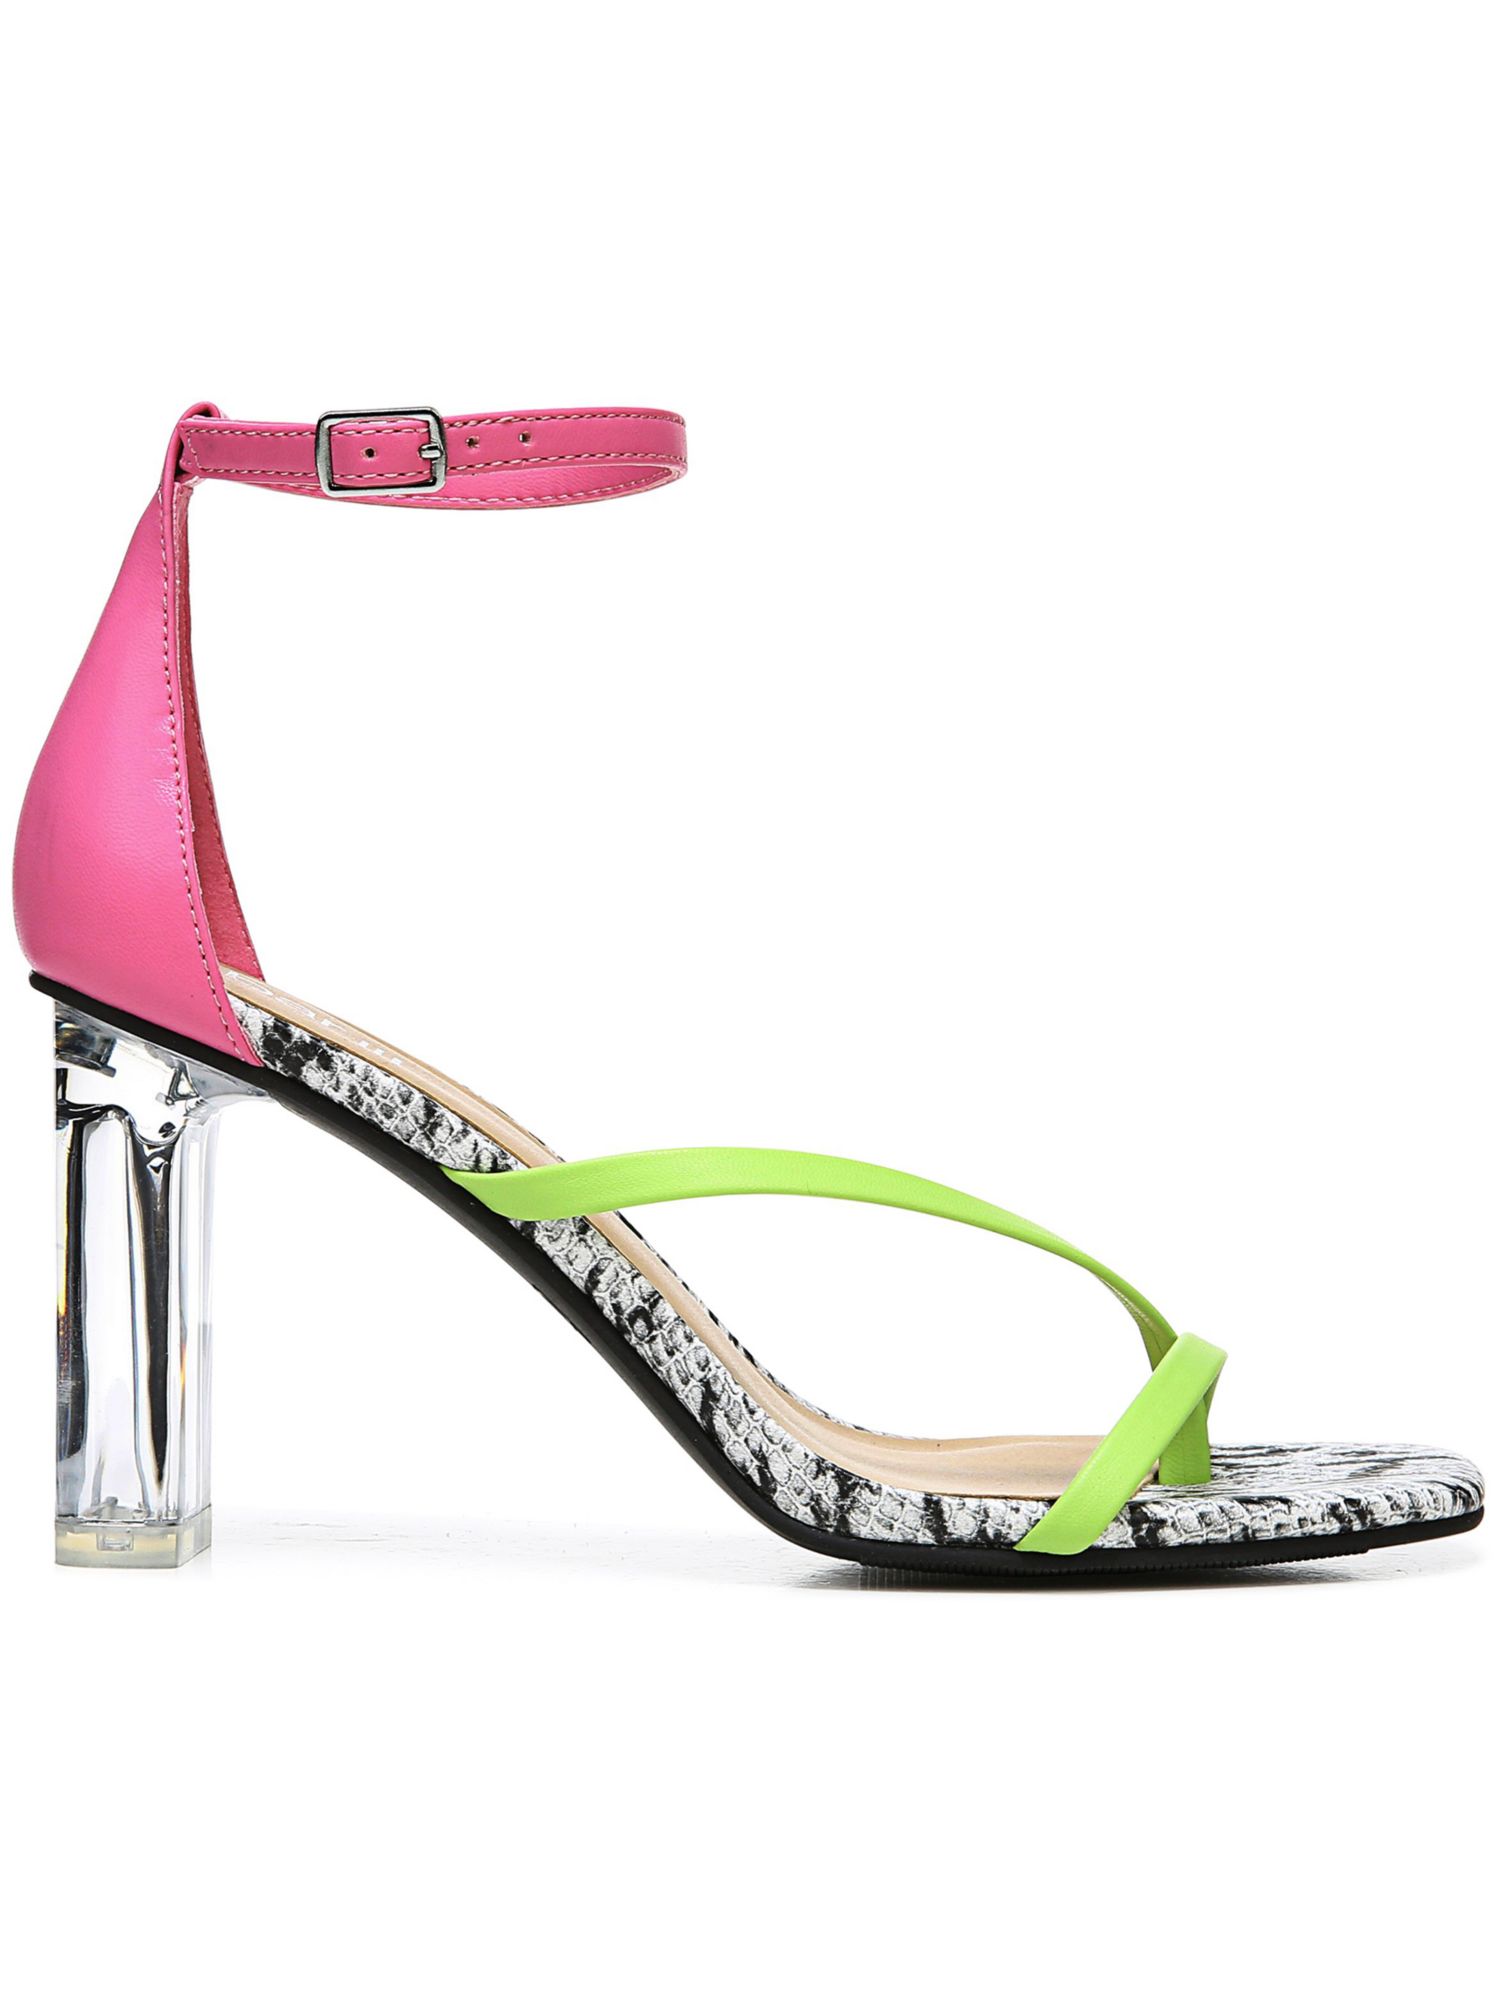 BAR III Womens Pink Transparent Heel Blakke Block Heel Thong Sandals Shoes 6 M